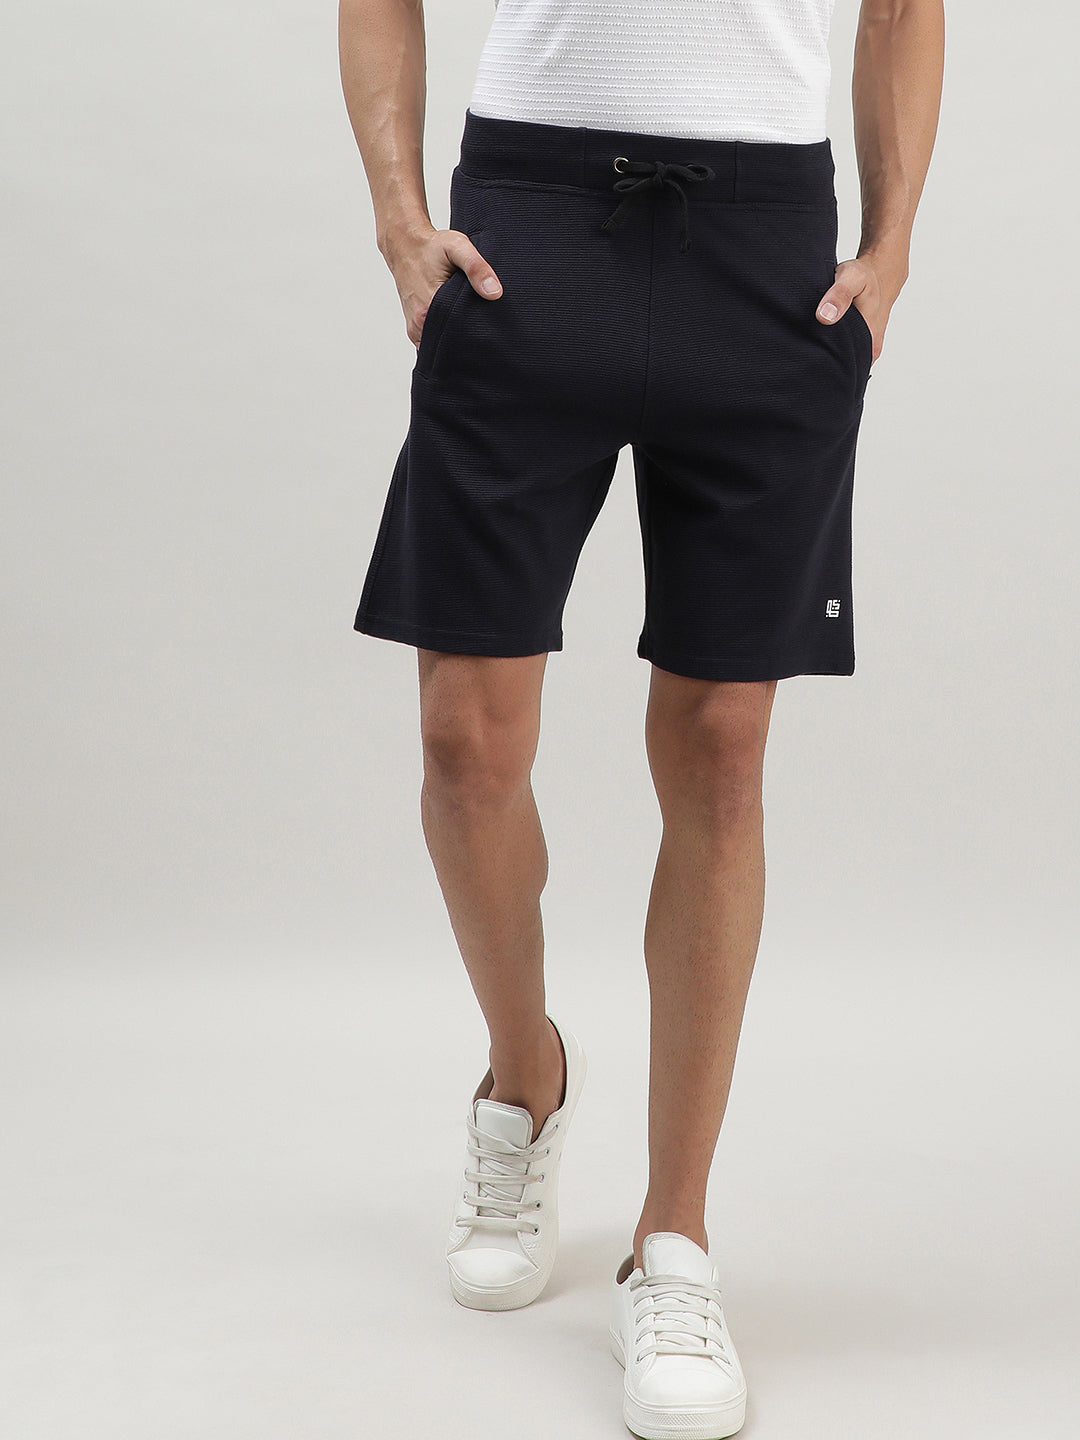 Navy Blue Shorts for Men